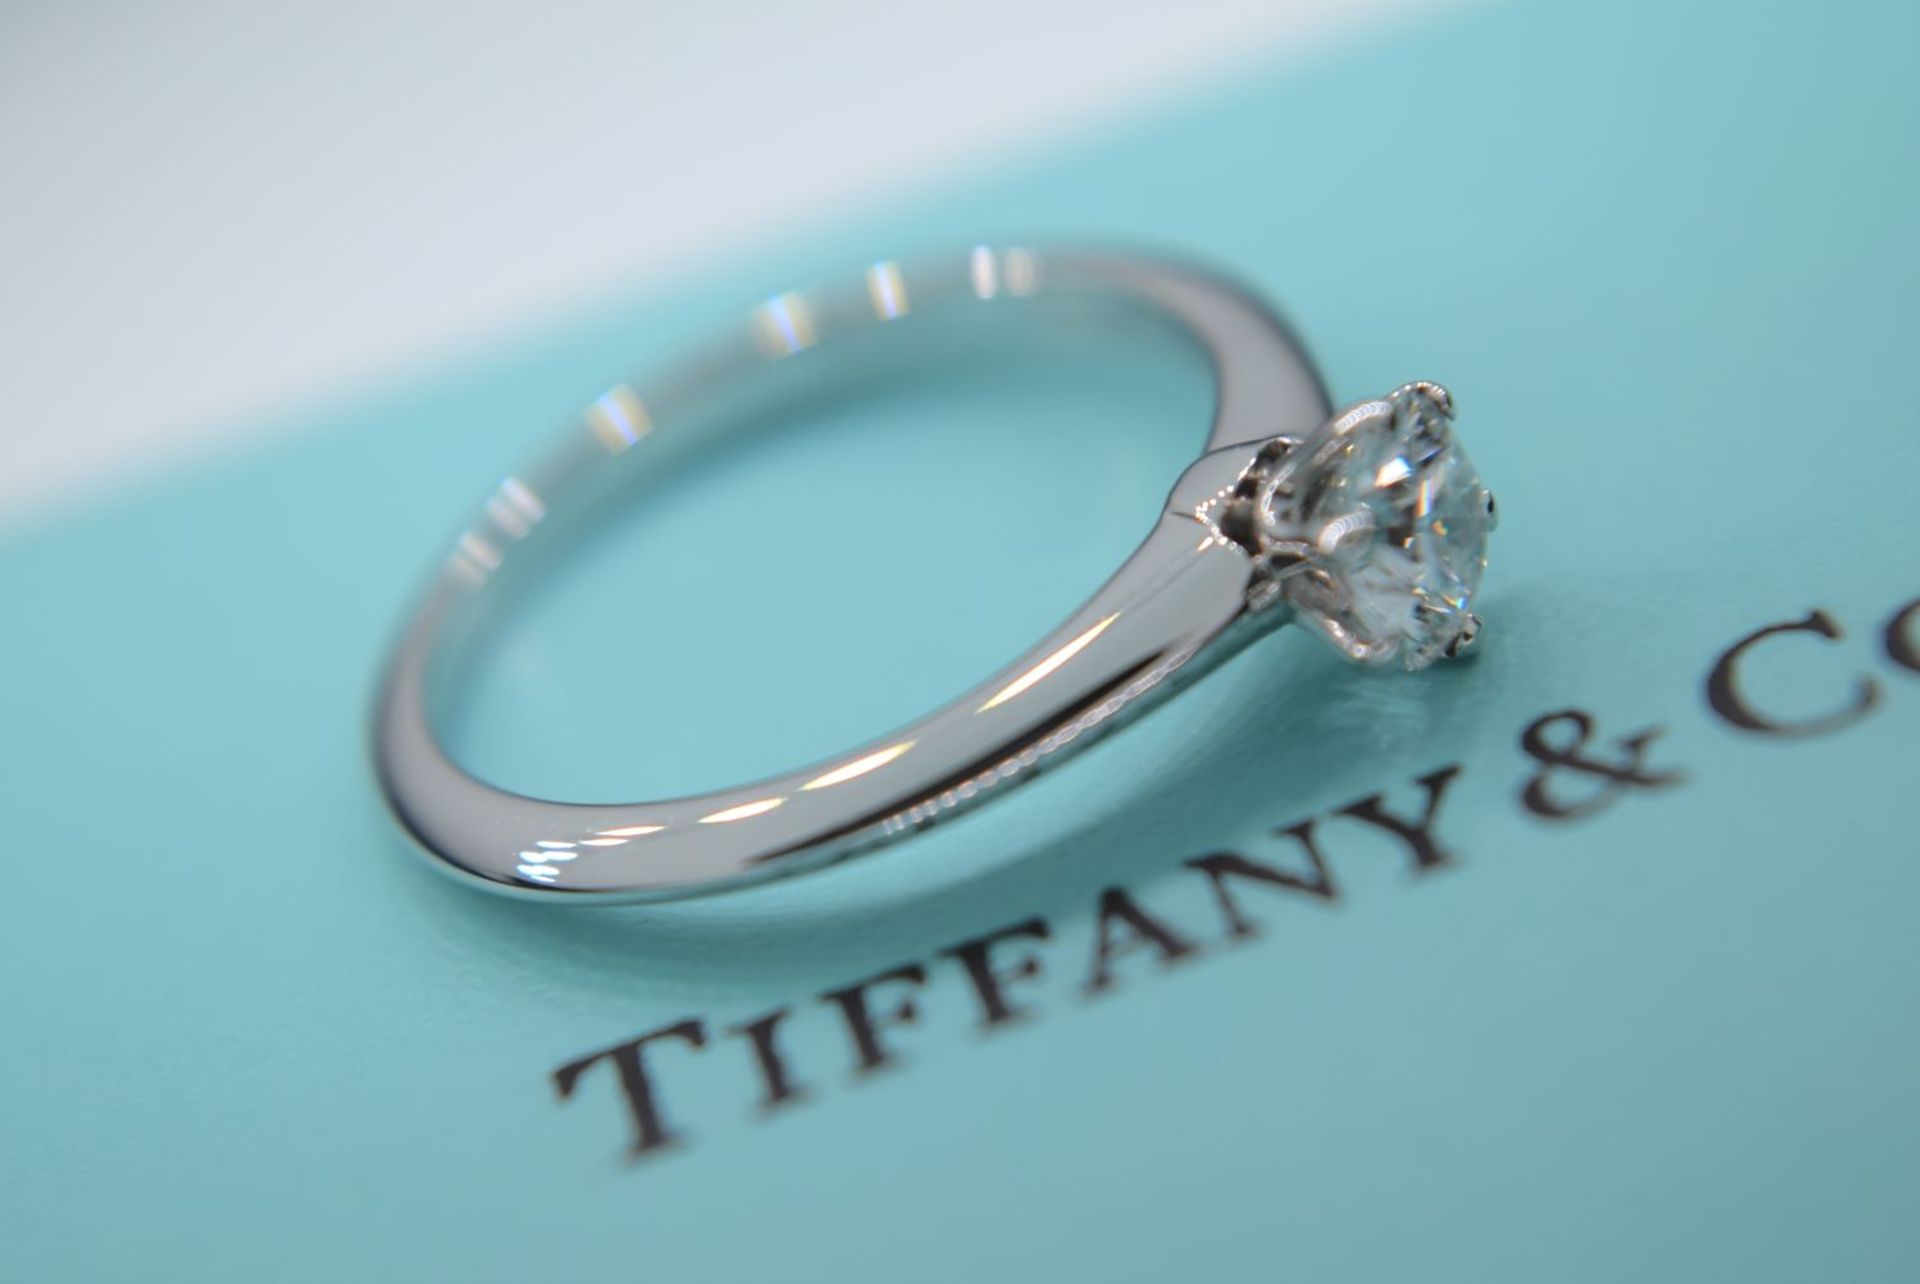 *HARRODS* TIFFANY & CO PLATINUM VVS2 DIAMOND SOLITAIRE RING ""THE TIFFANY SETTING®"" - BOX & CERT - Image 7 of 17